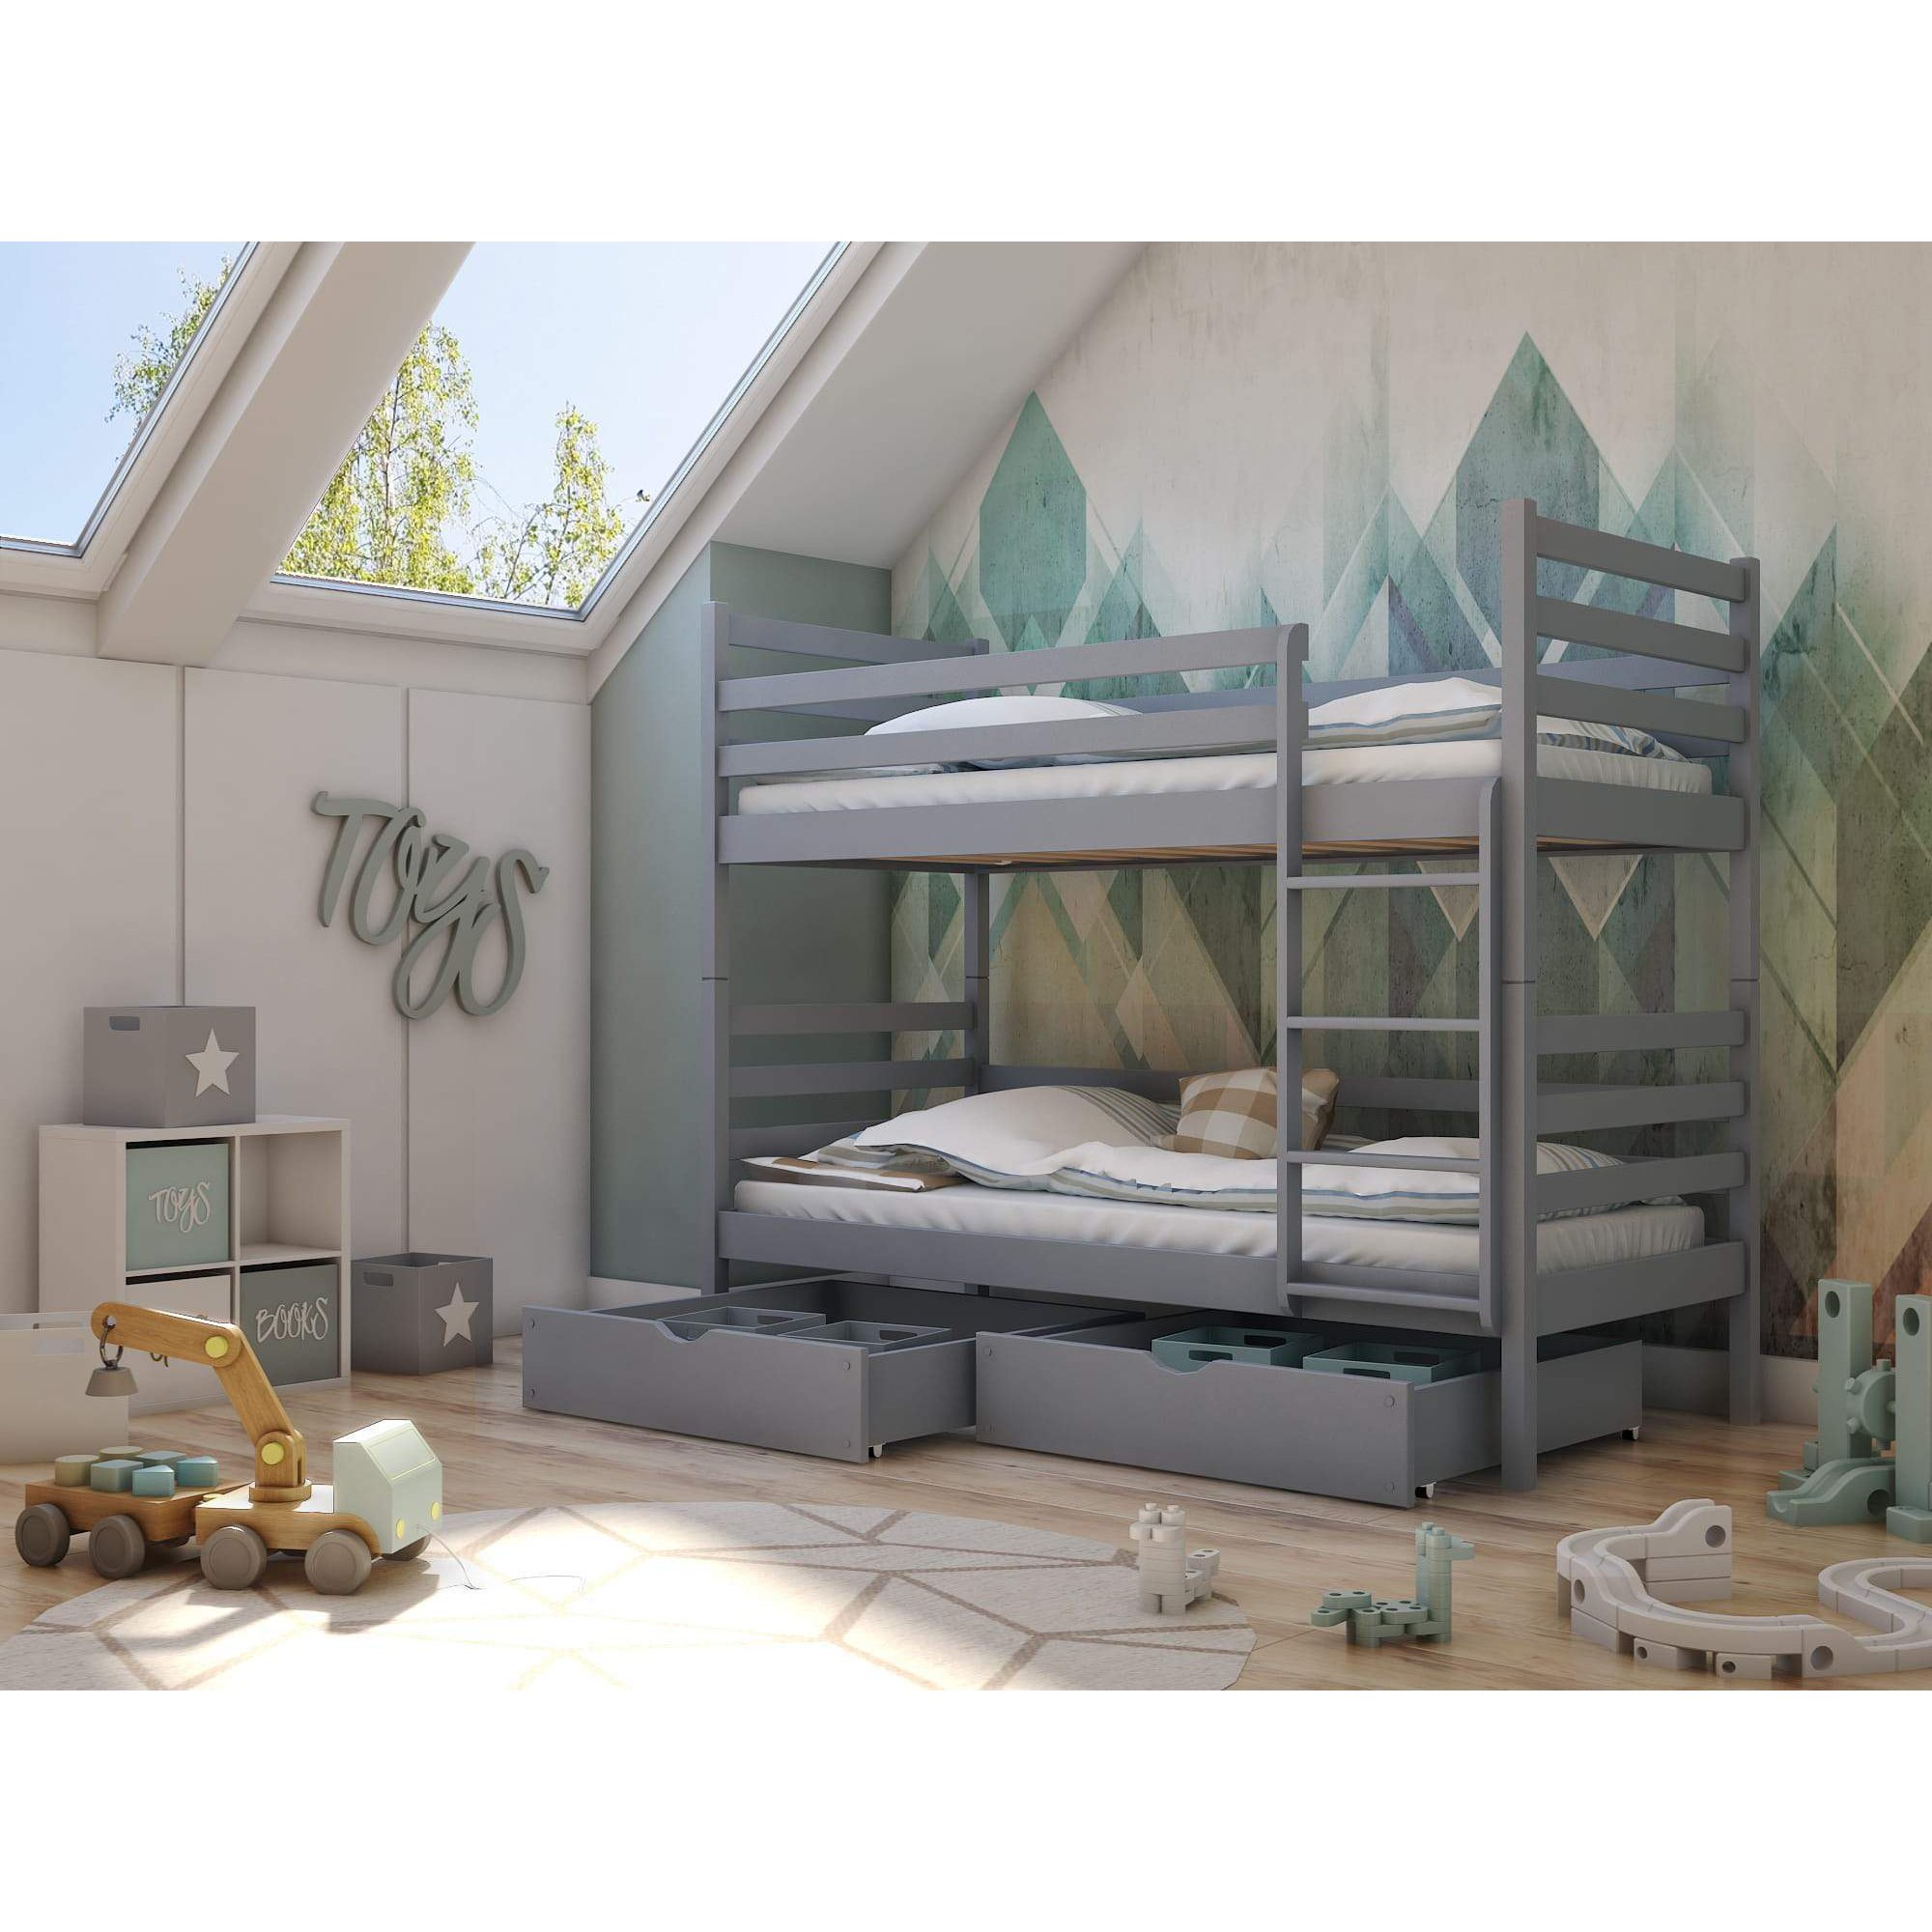 Wooden Bunk Bed Nemo With Storage, Argos Home Heavy Duty Bunk Bed Frame Grey